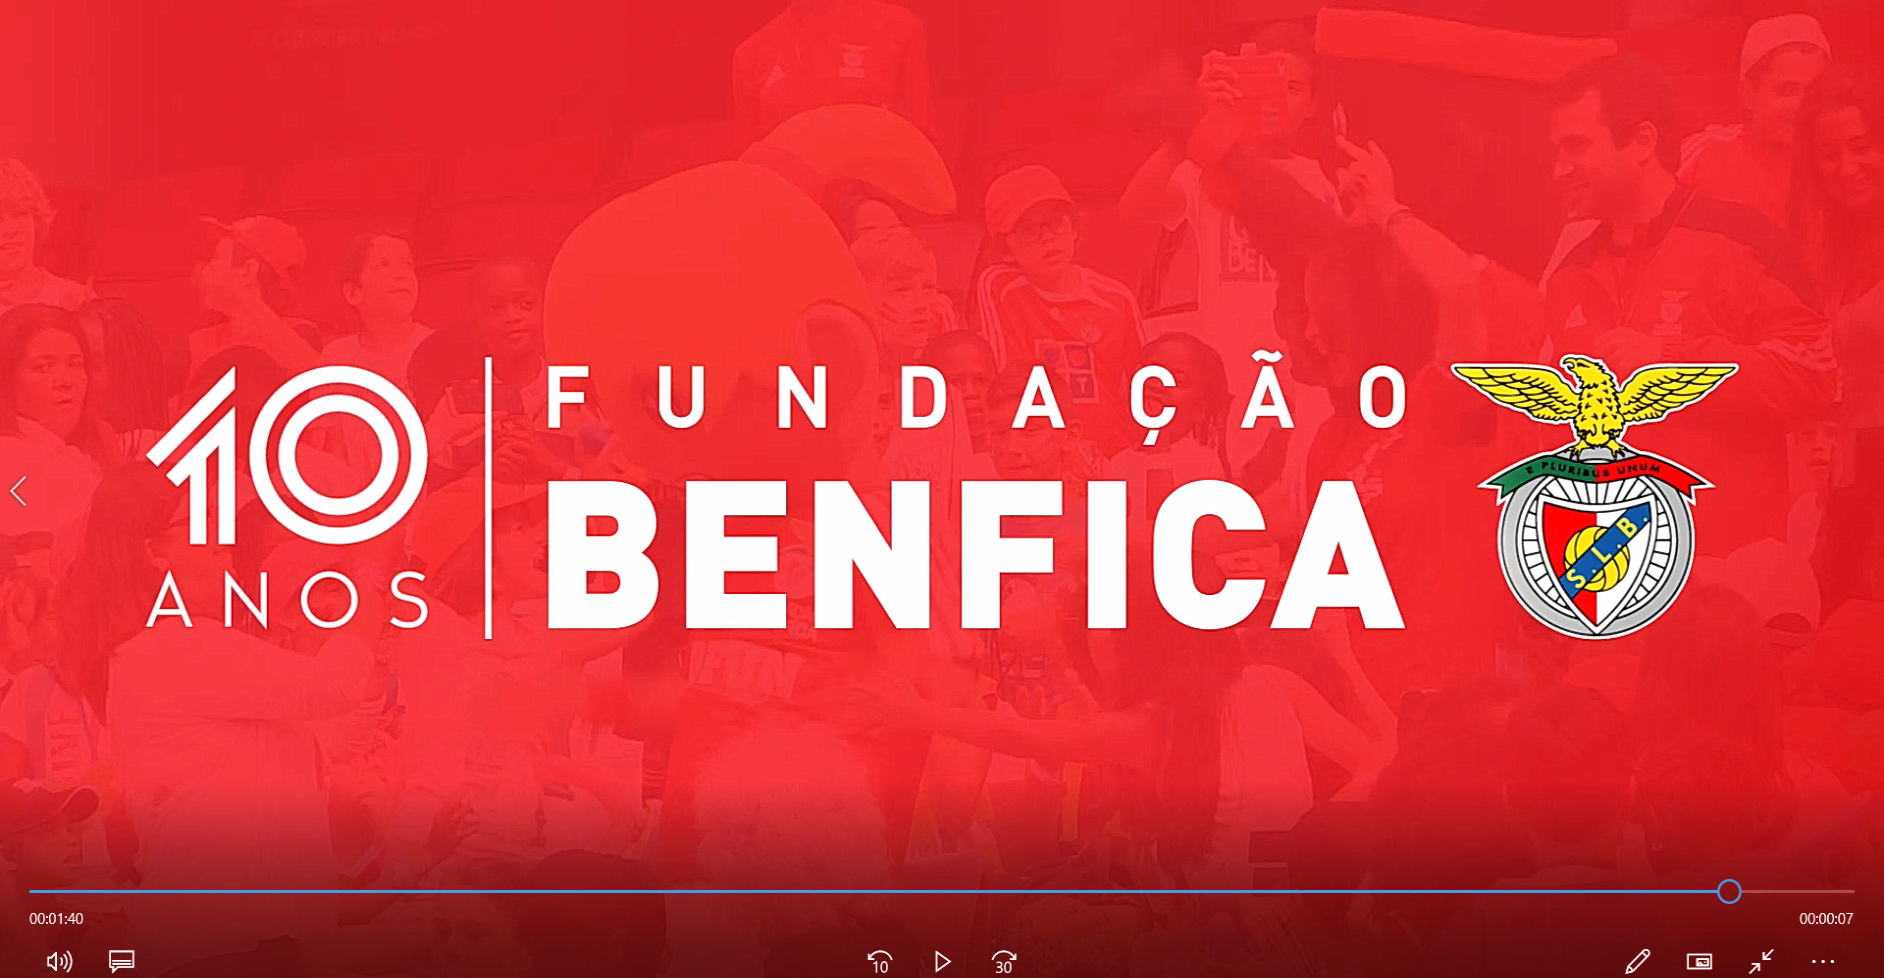 Fundacao Benfica 10 anos